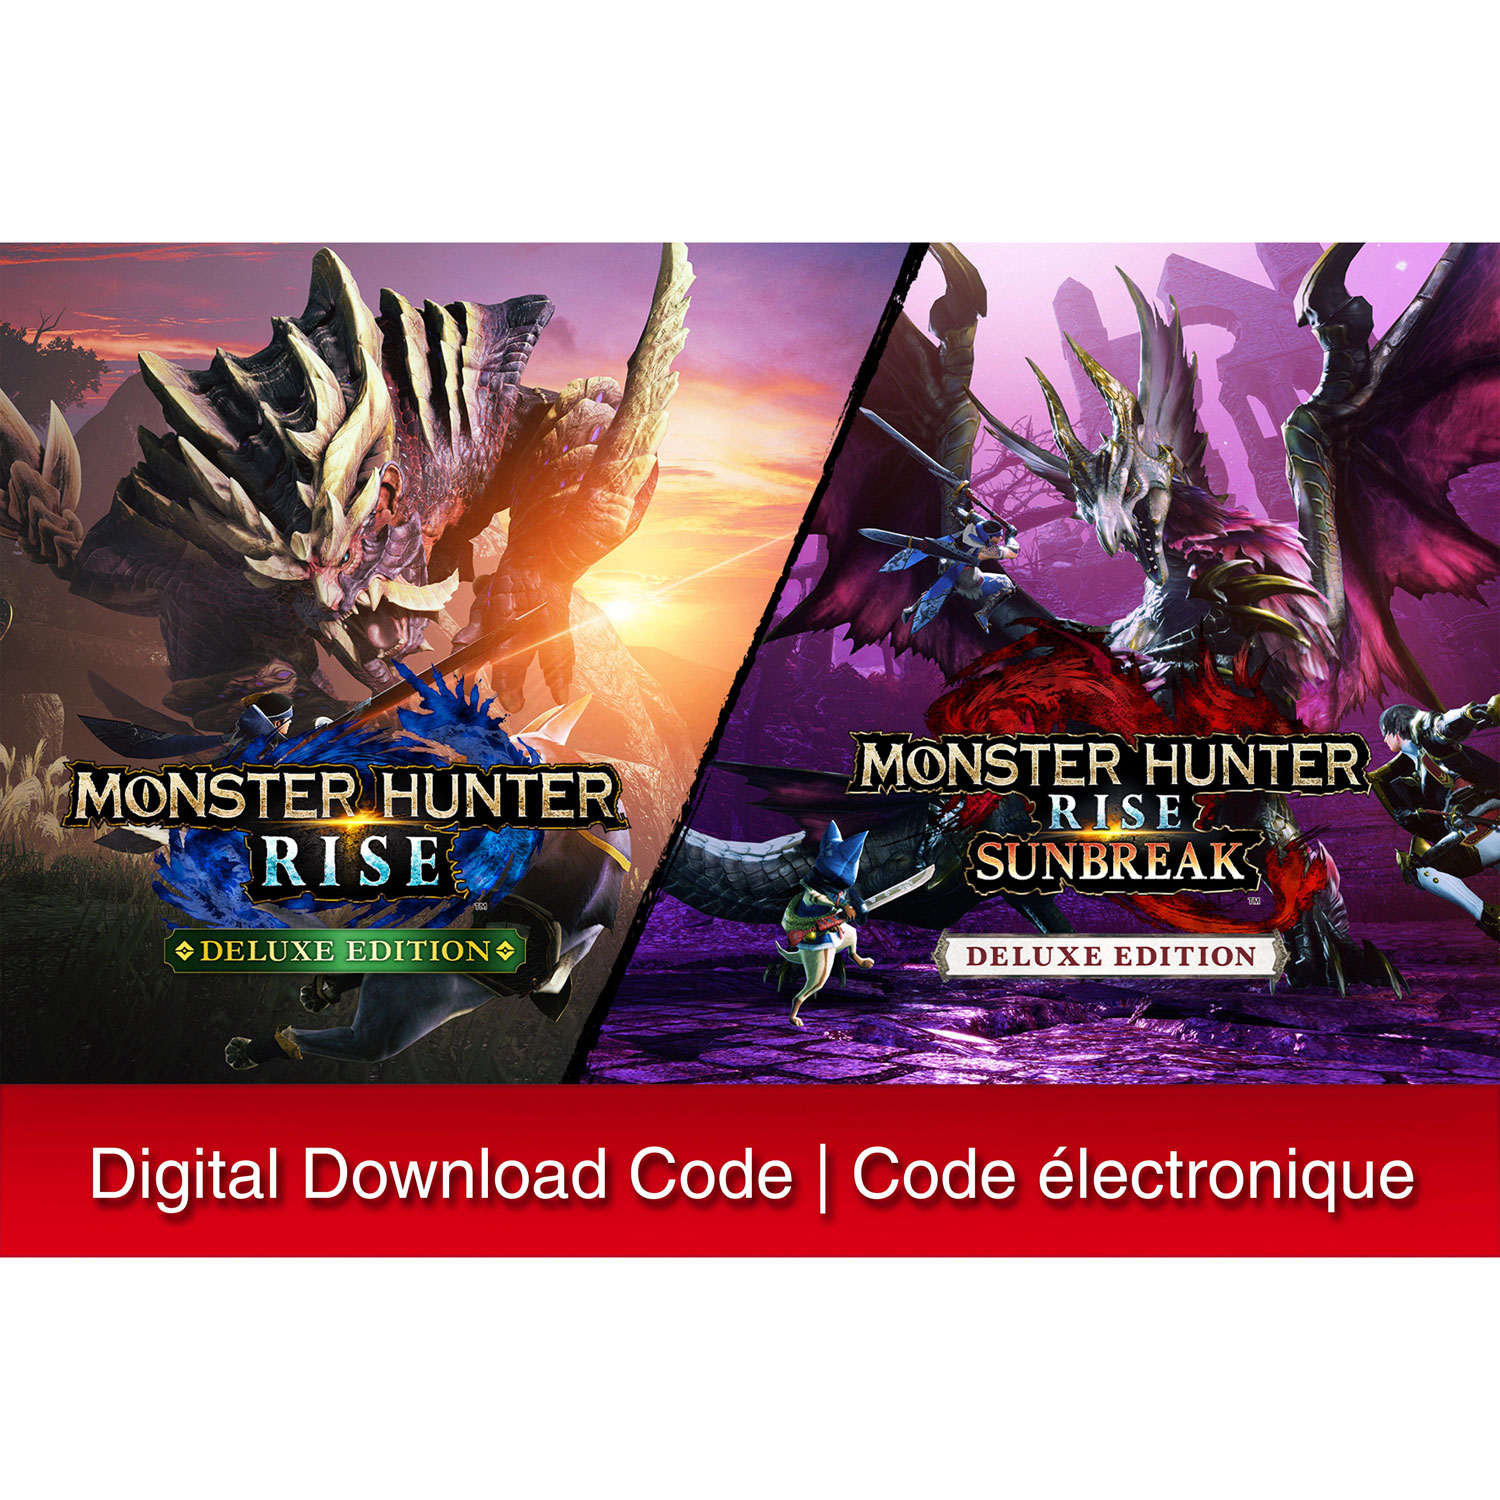 Monster Hunter Rise + Sunbreak Deluxe Edition (Switch) - Digital Download